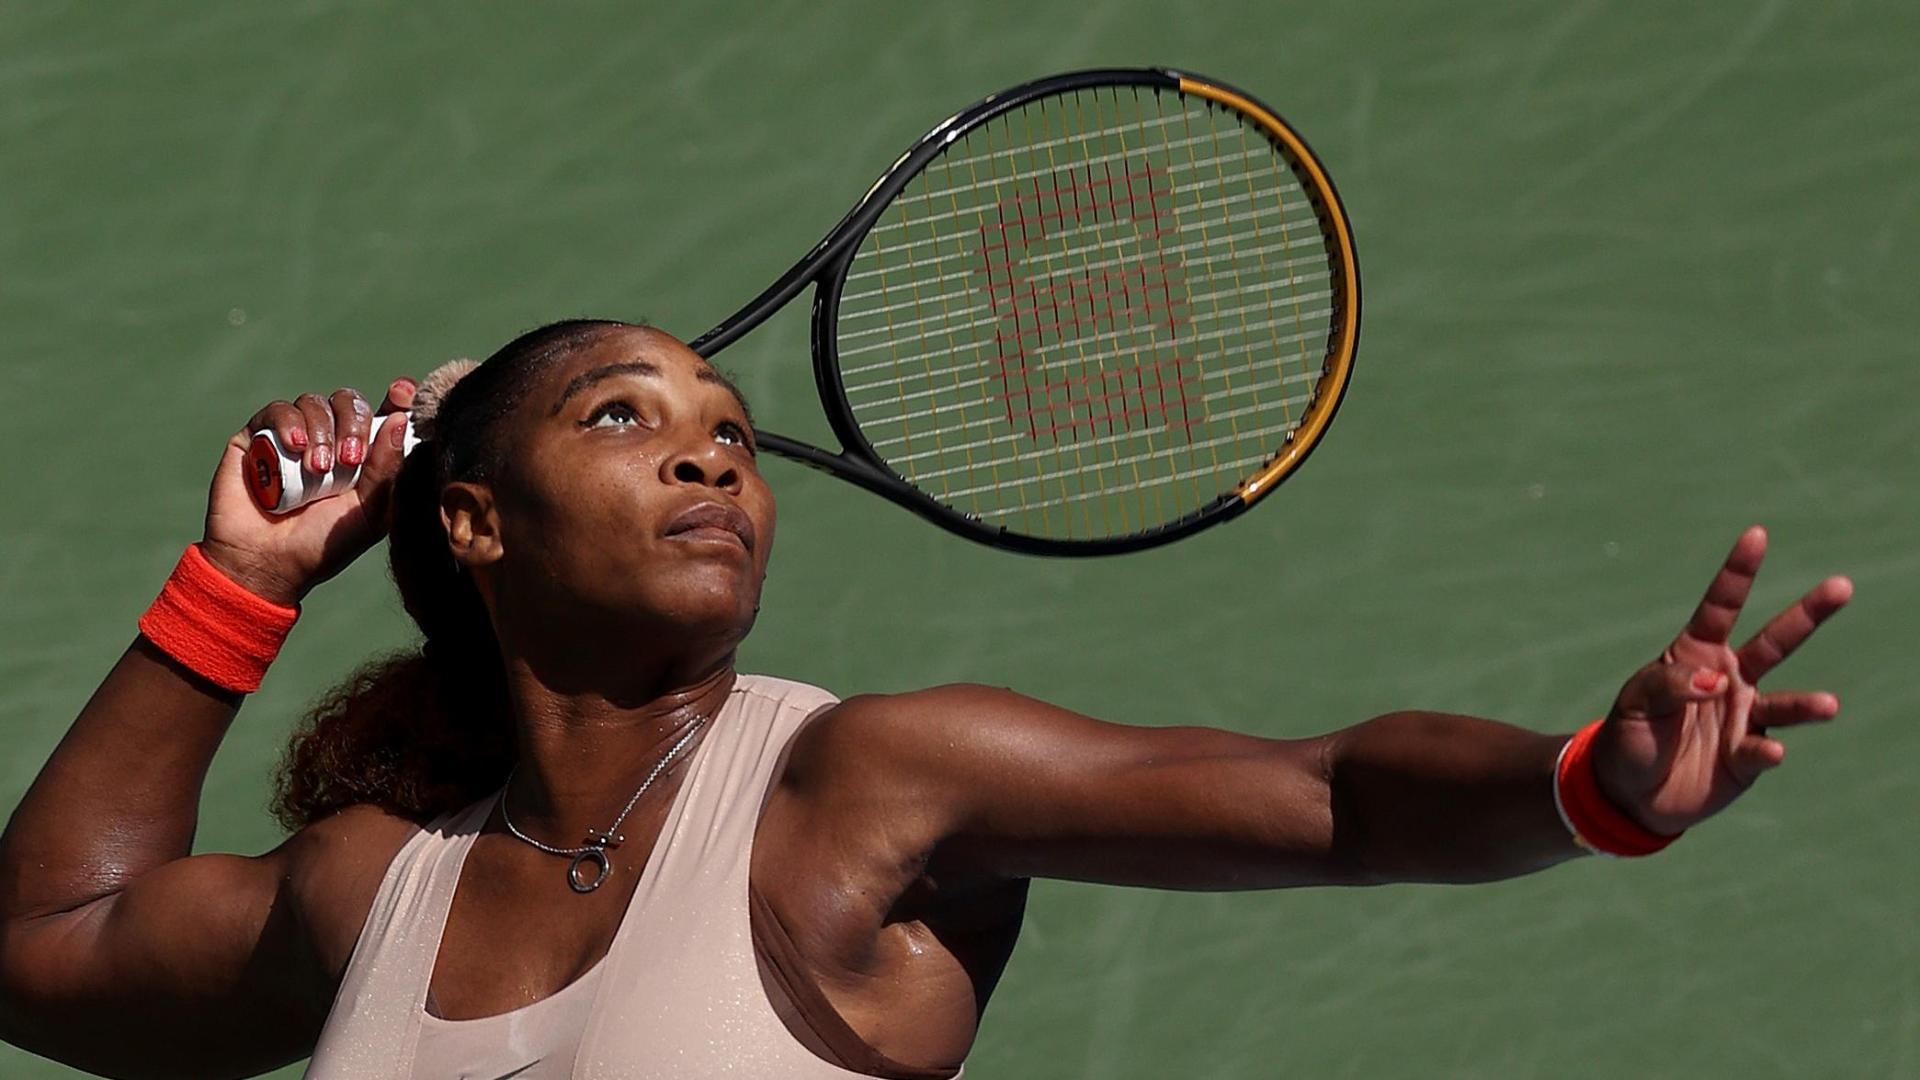 Serena survives tough battle vs. Sakkari to advance to quarters